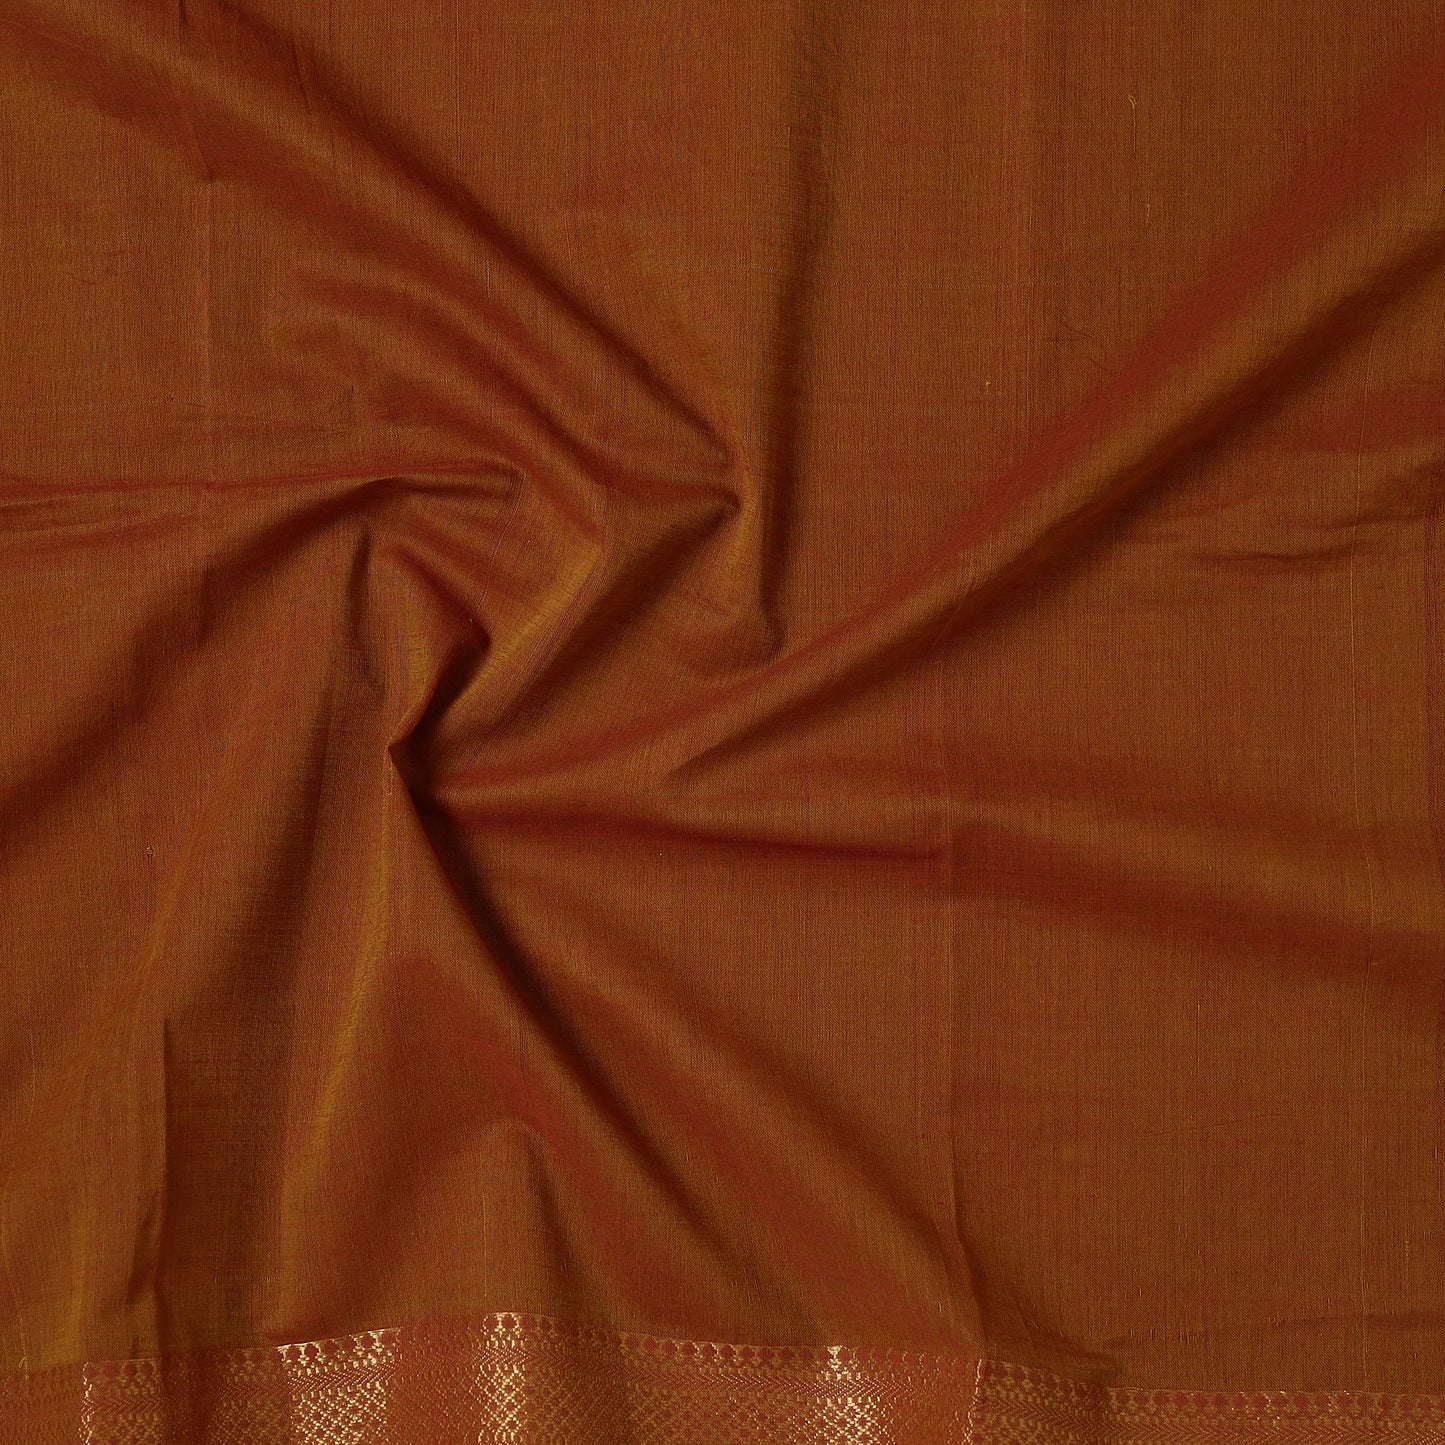 Brown - Mangalagiri Handloom Cotton Zari Border Precut Fabric 34